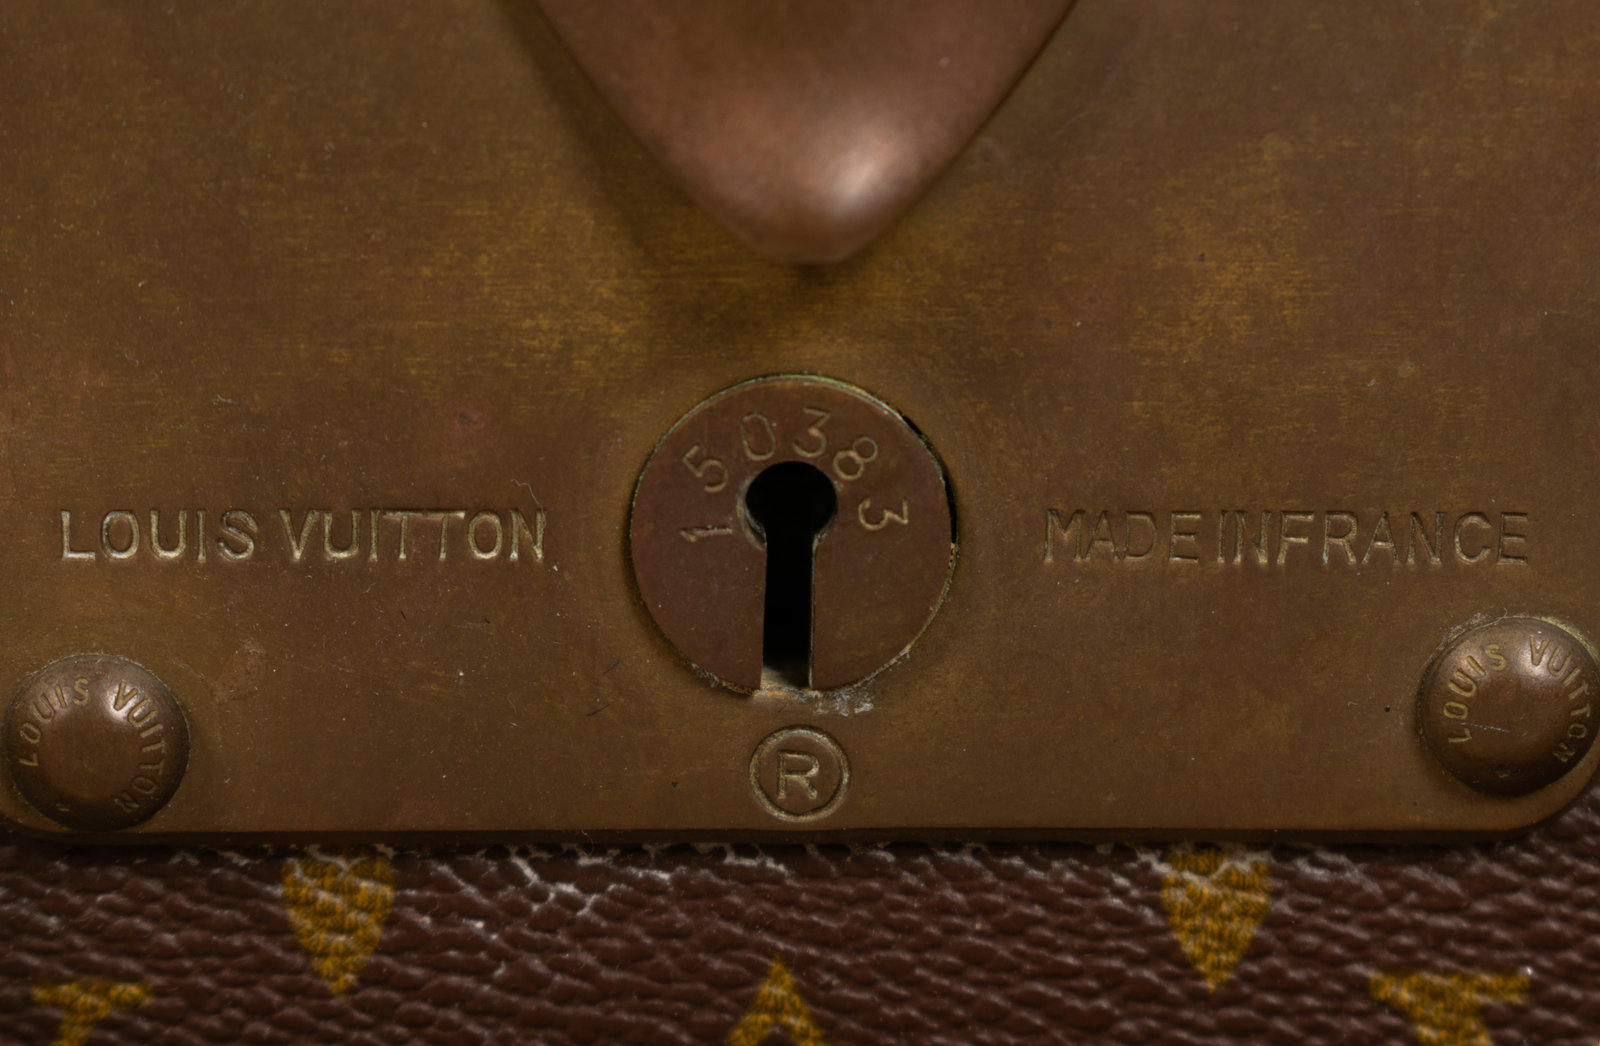 Lot - A Louis Vuitton monogram Alzer 75 hard sided suitcase 1980s